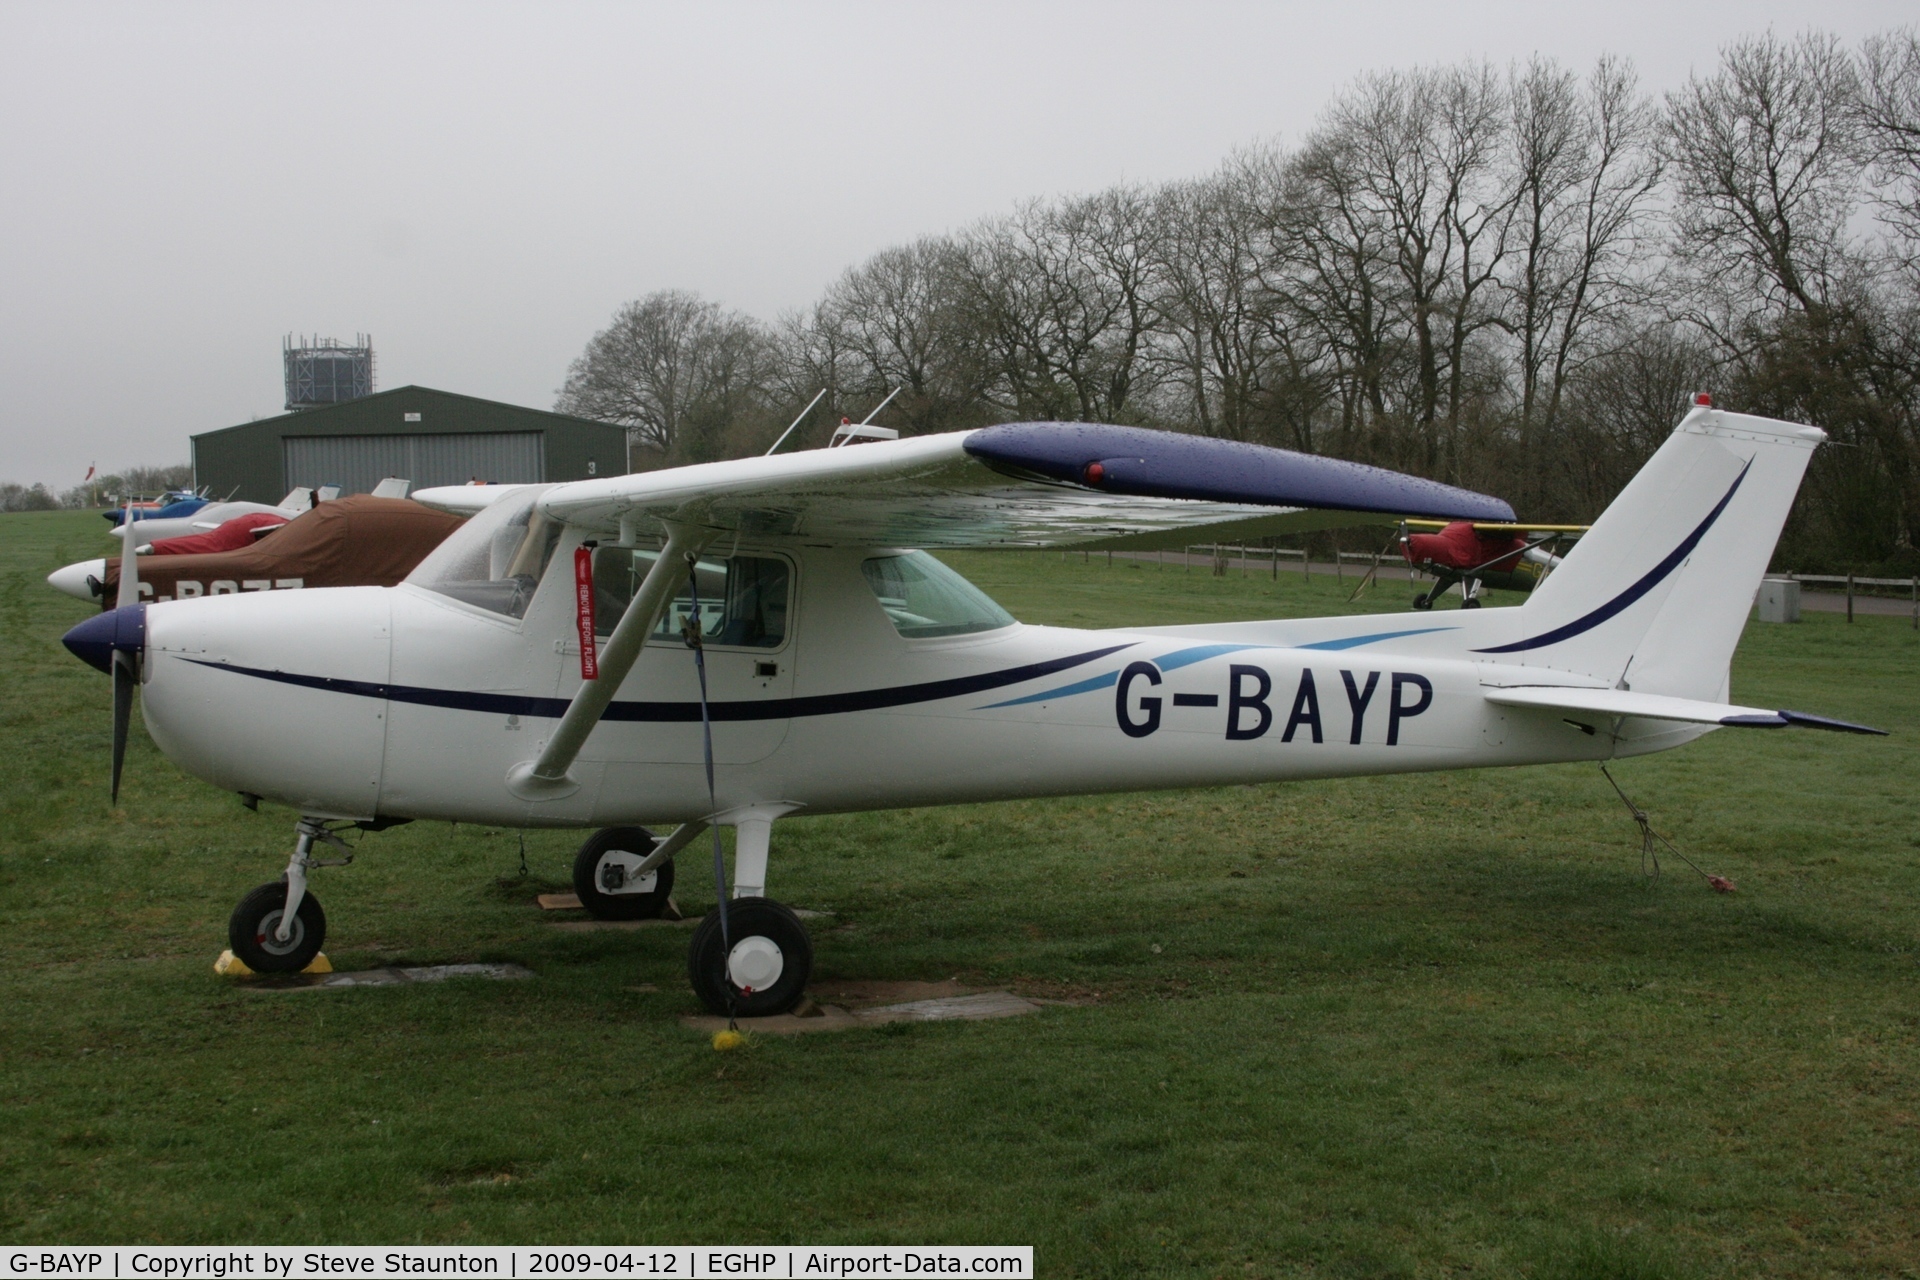 G-BAYP, 1973 Cessna 150L C/N 150-74017, Taken at Popham Airfield, England on a gloomy April Sunday (12/04/09)